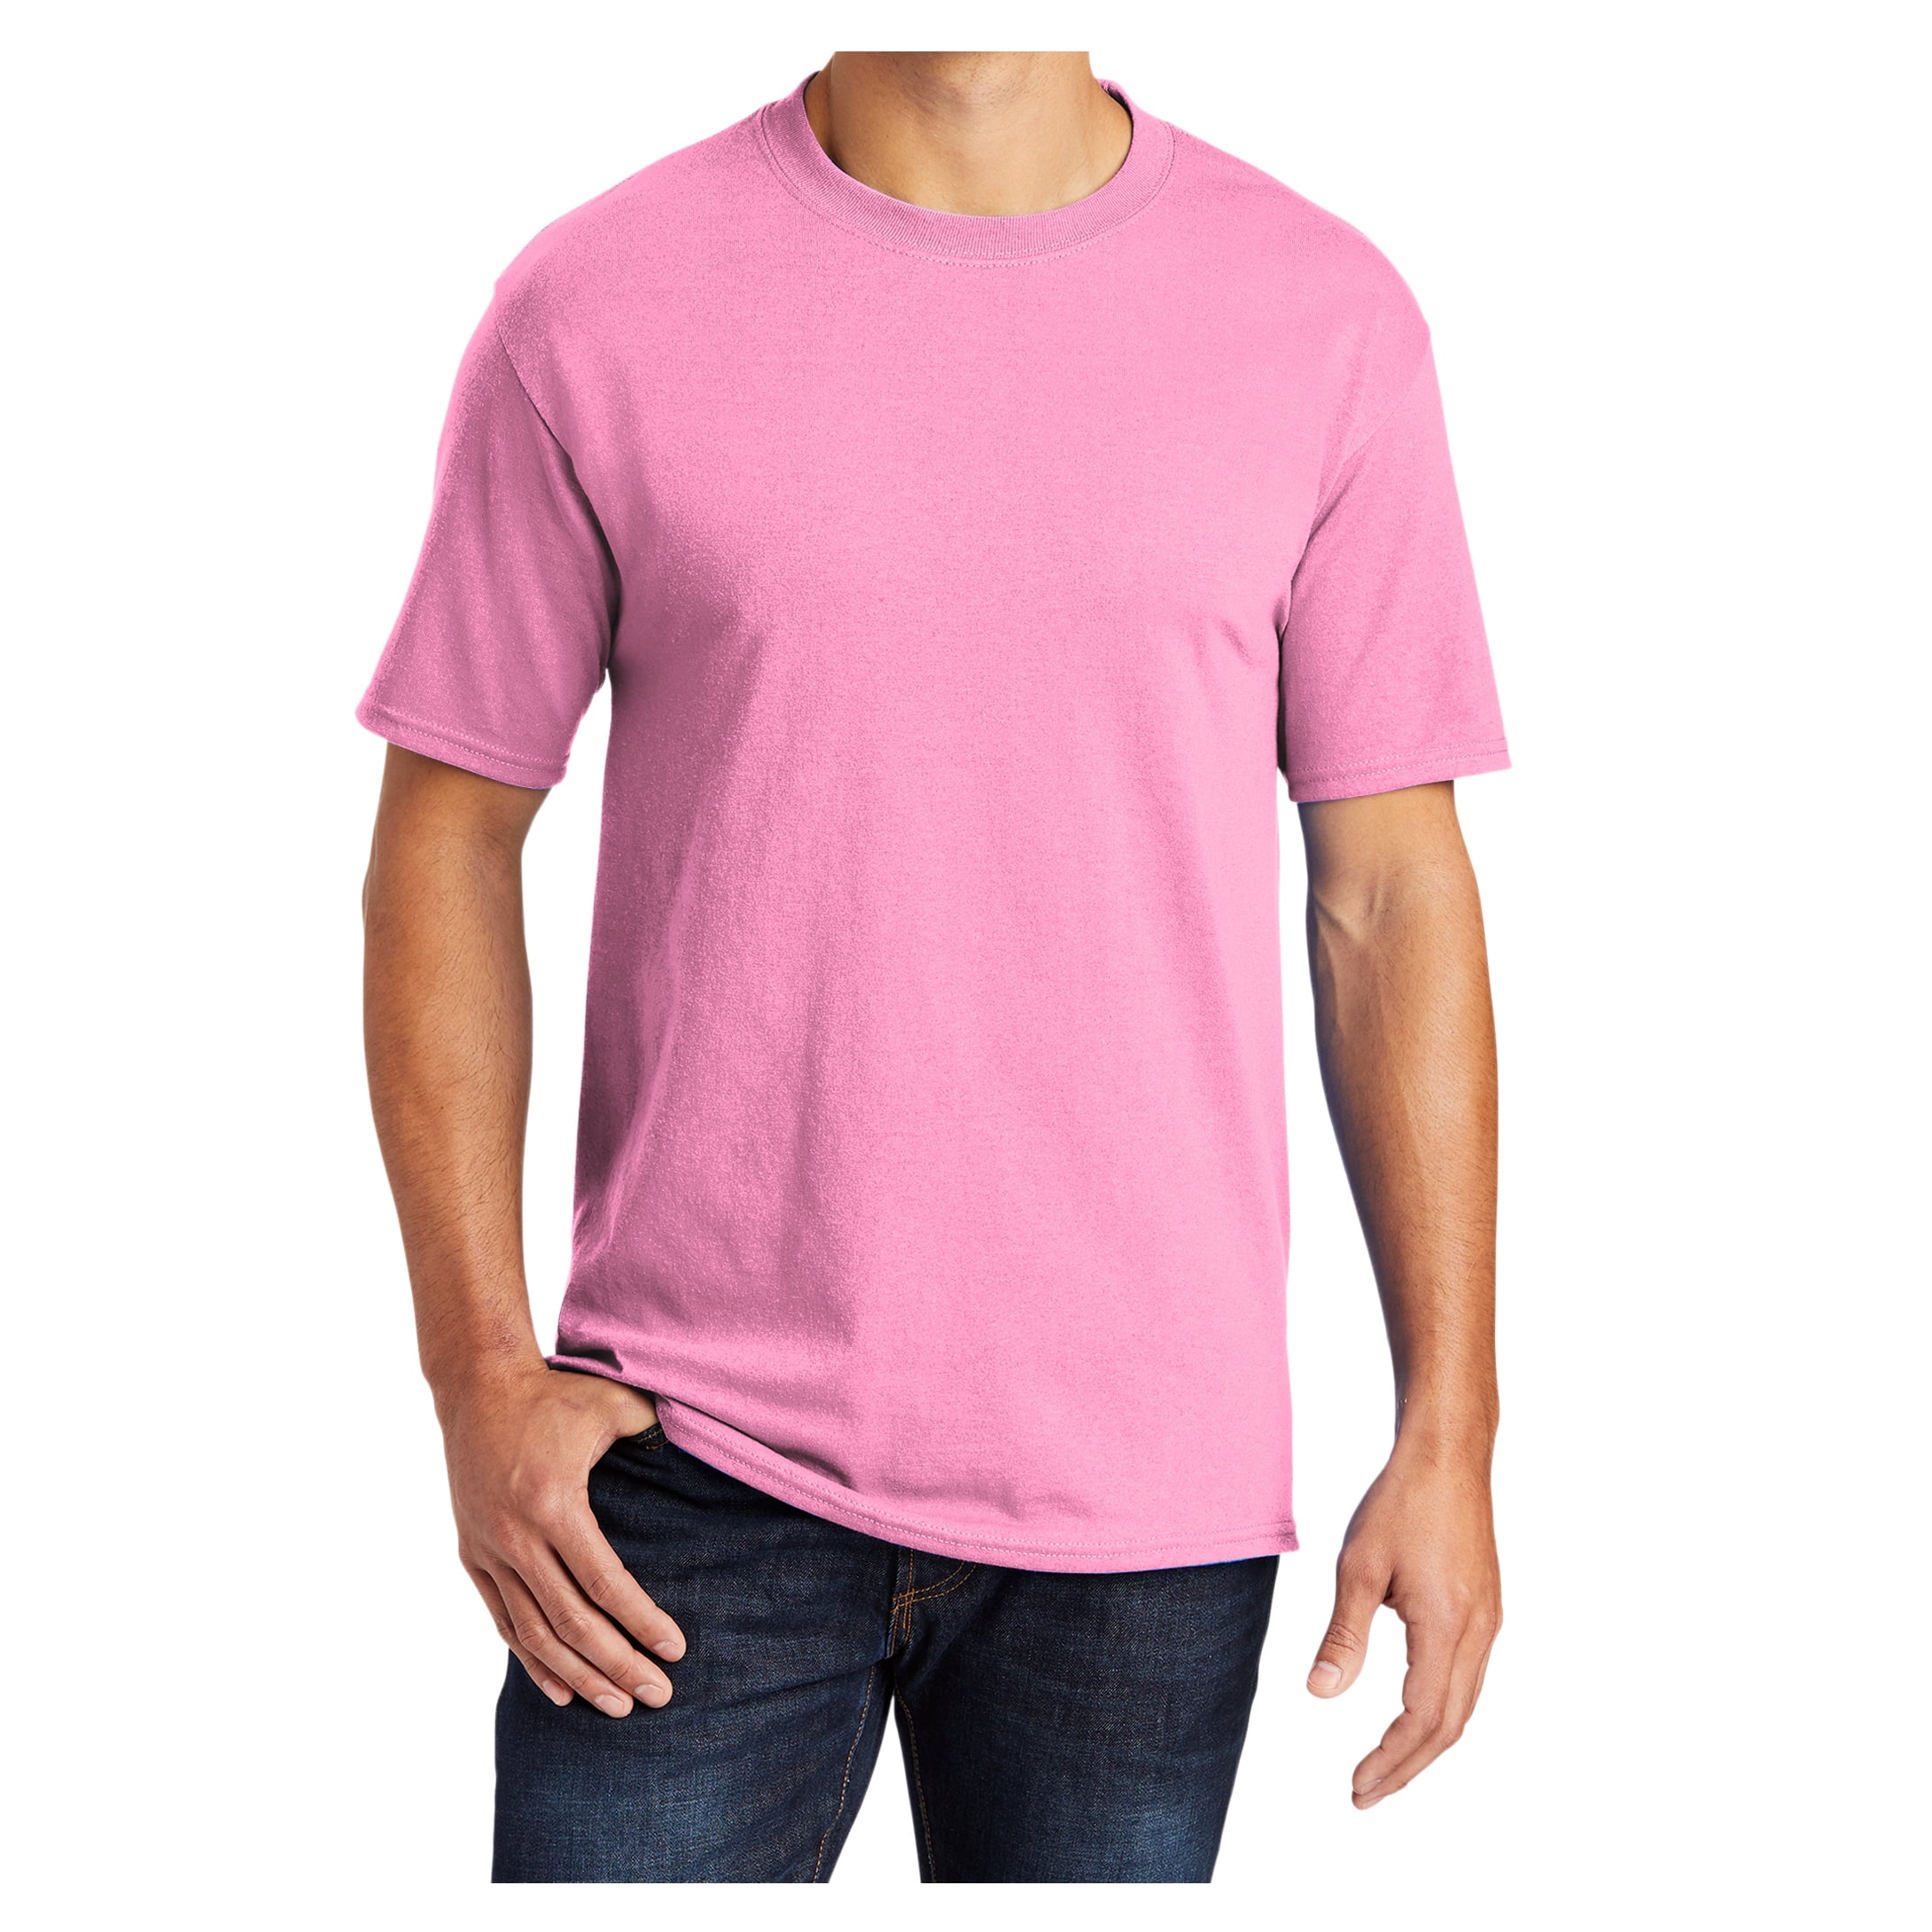 Mens Core Blend Cotton/Polyester Tee Shirt Candy Pink 3XL